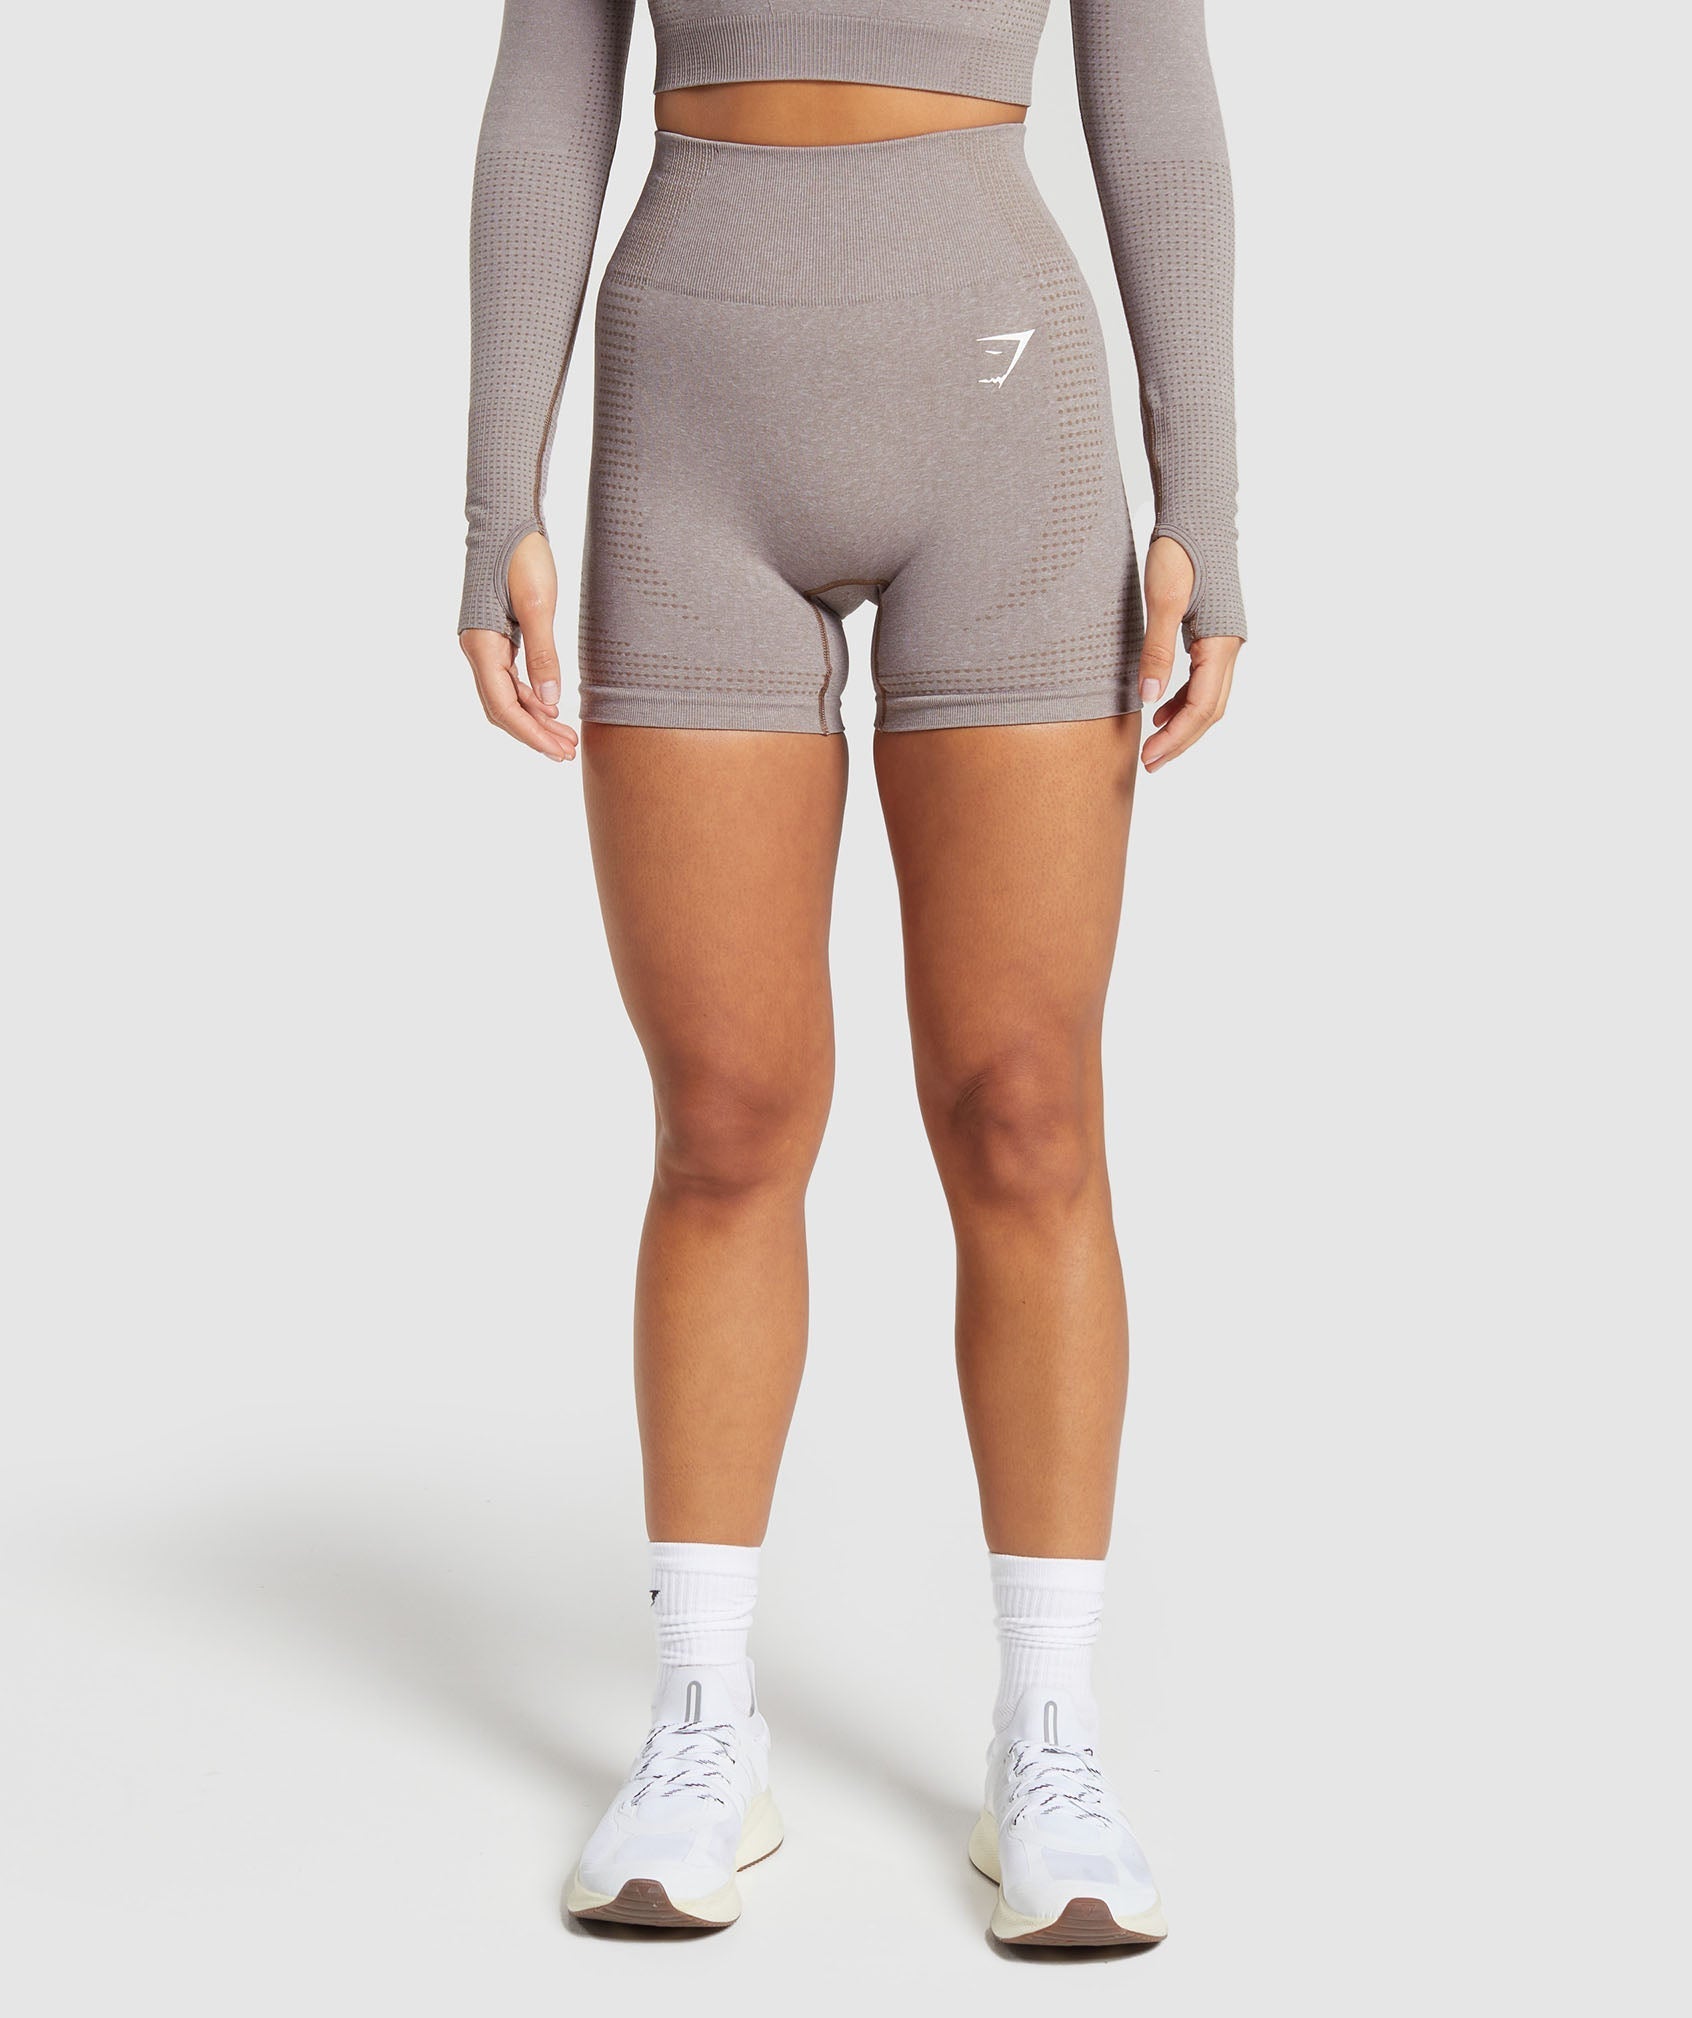 Vital Seamless 2.0 Shorts in Warm Taupe Marl